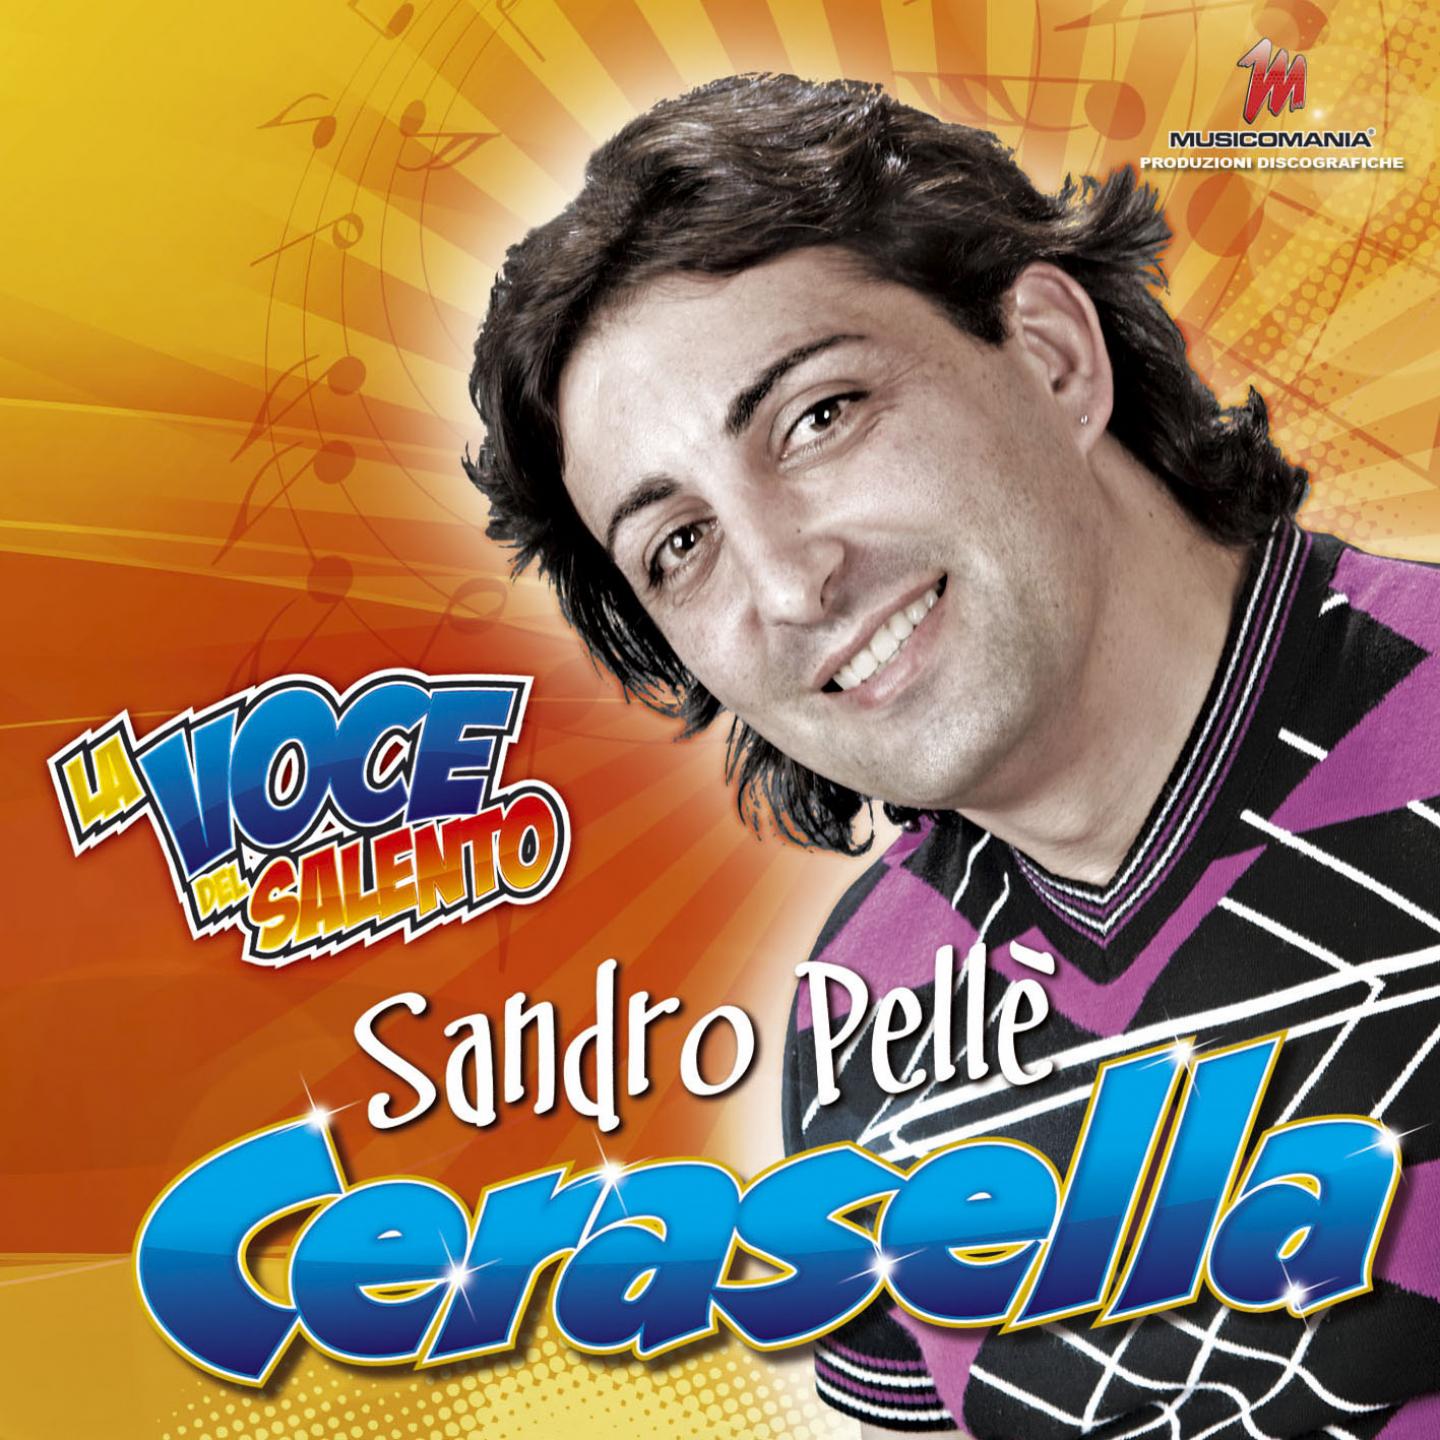 Постер альбома Cerasella